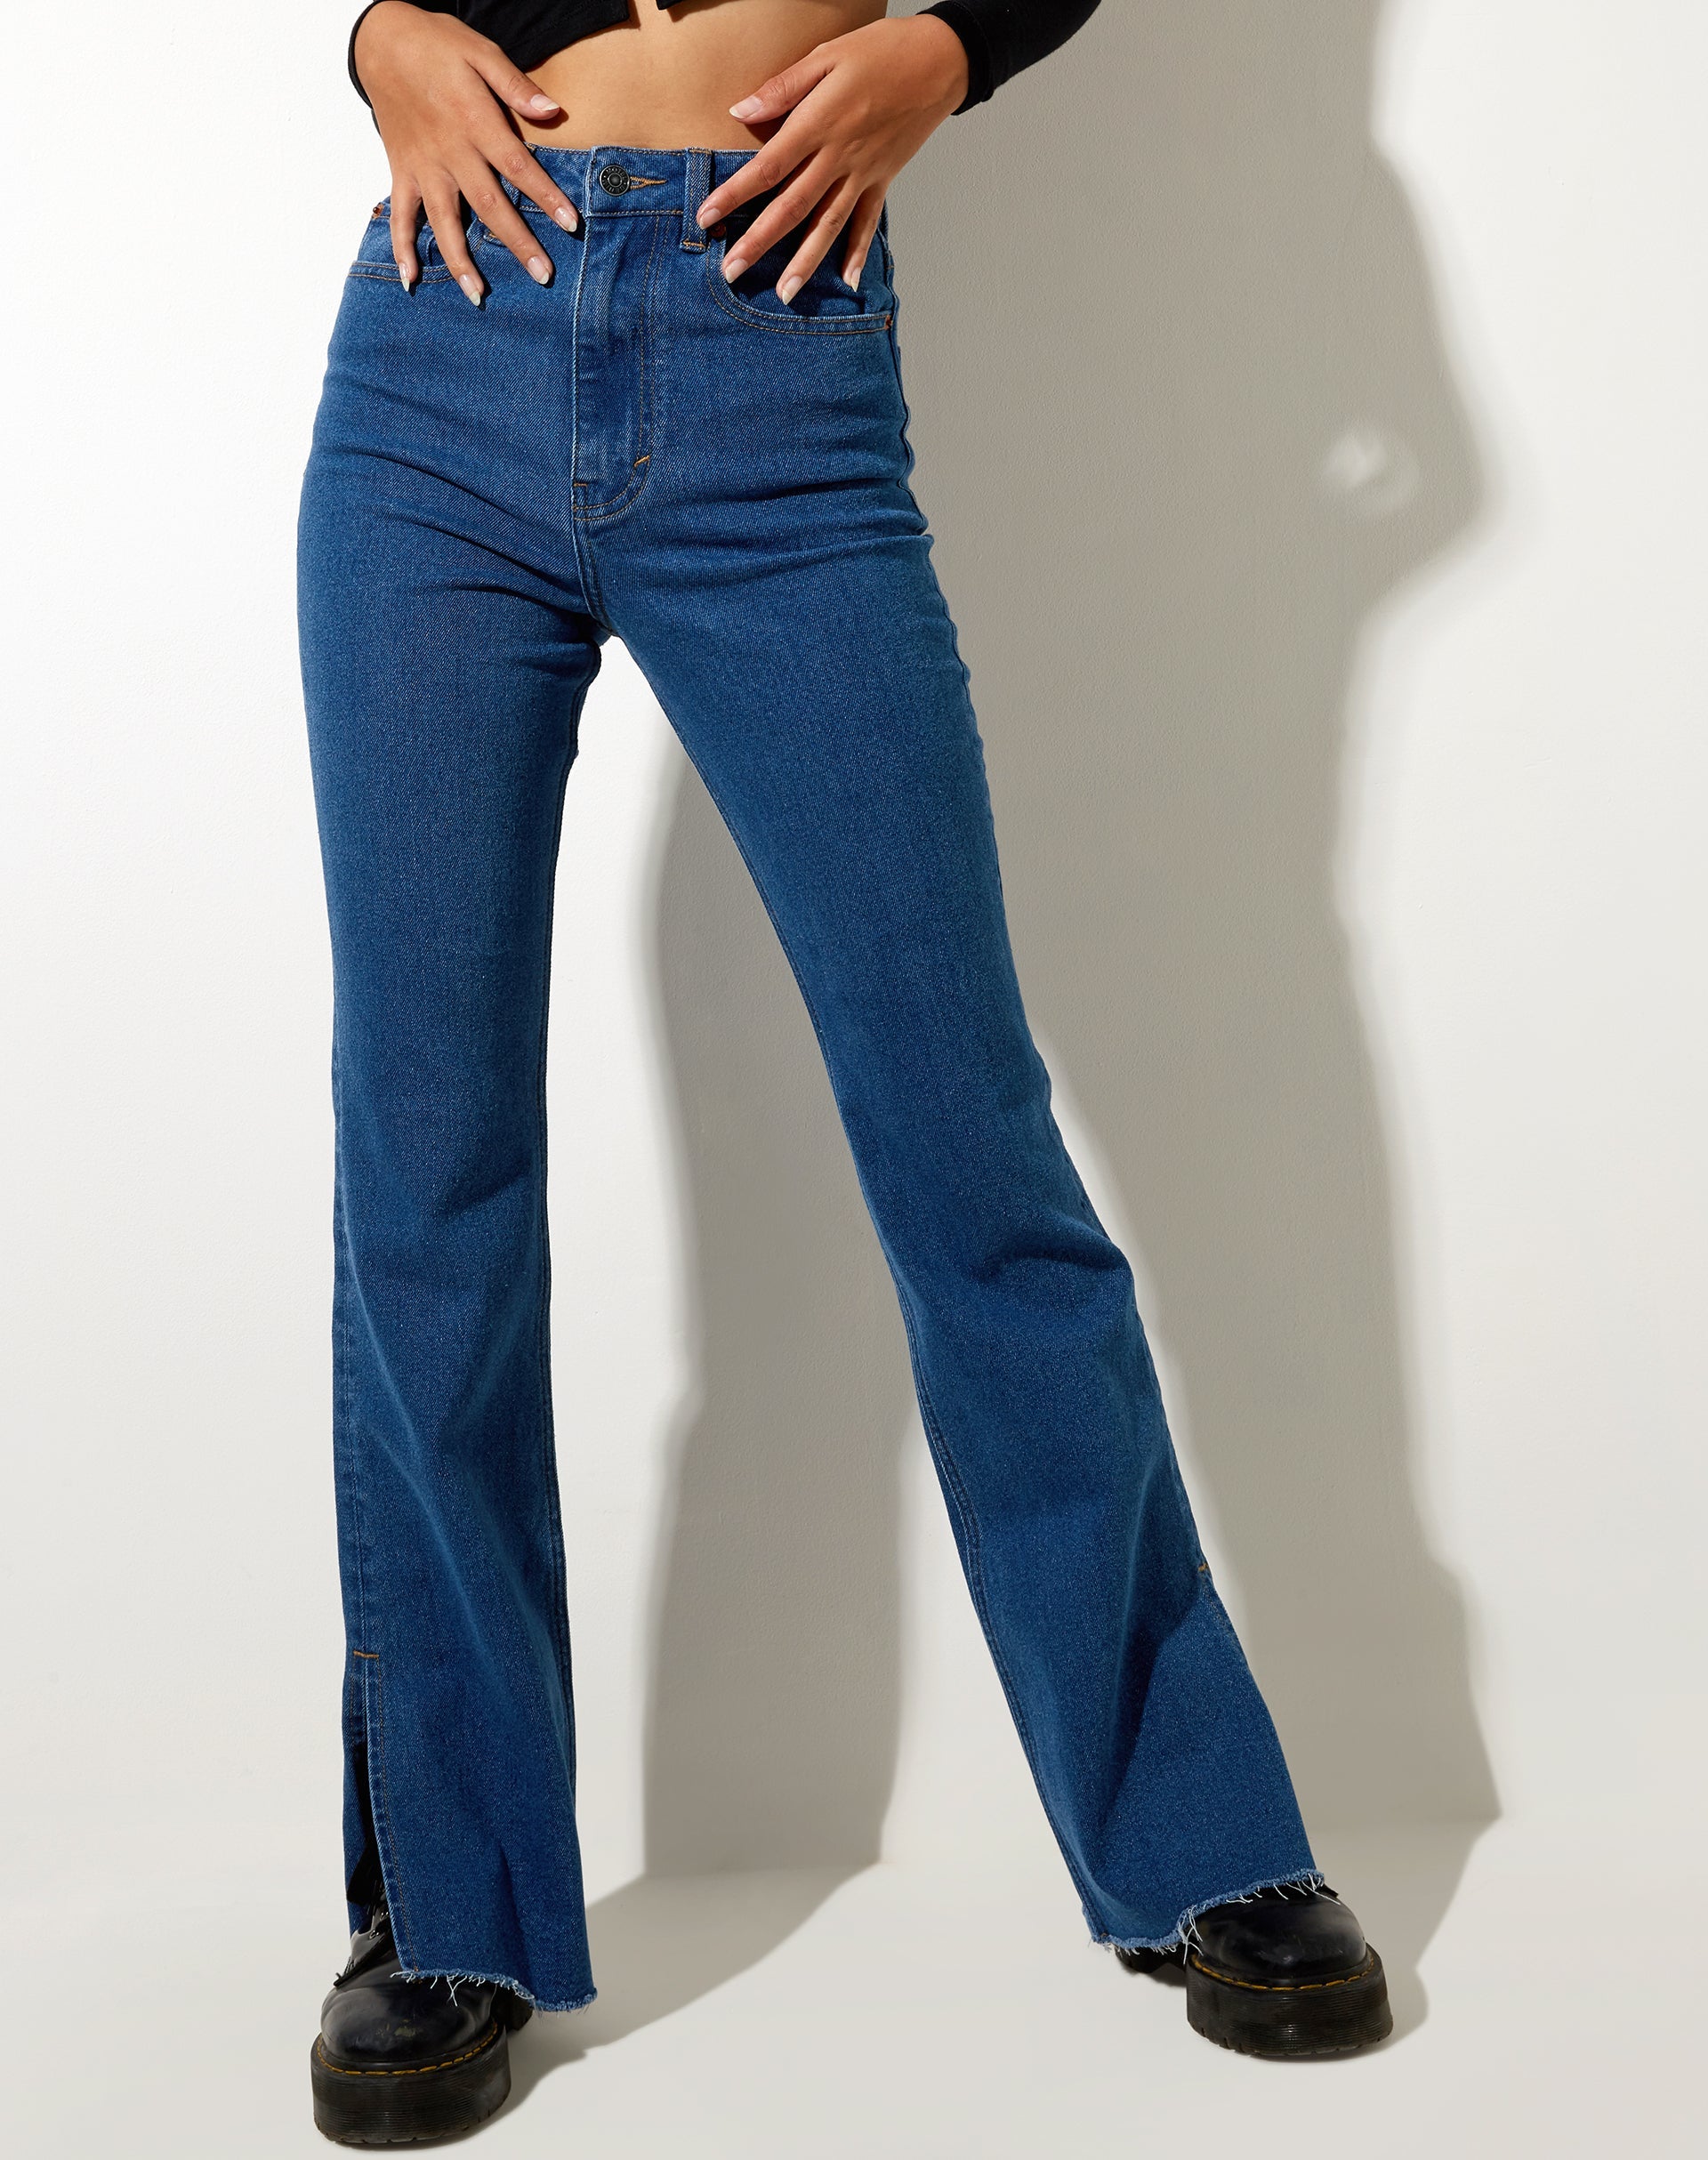 Low Rise Bootleg Jeans in Heavy Stitch Vintage Indigo